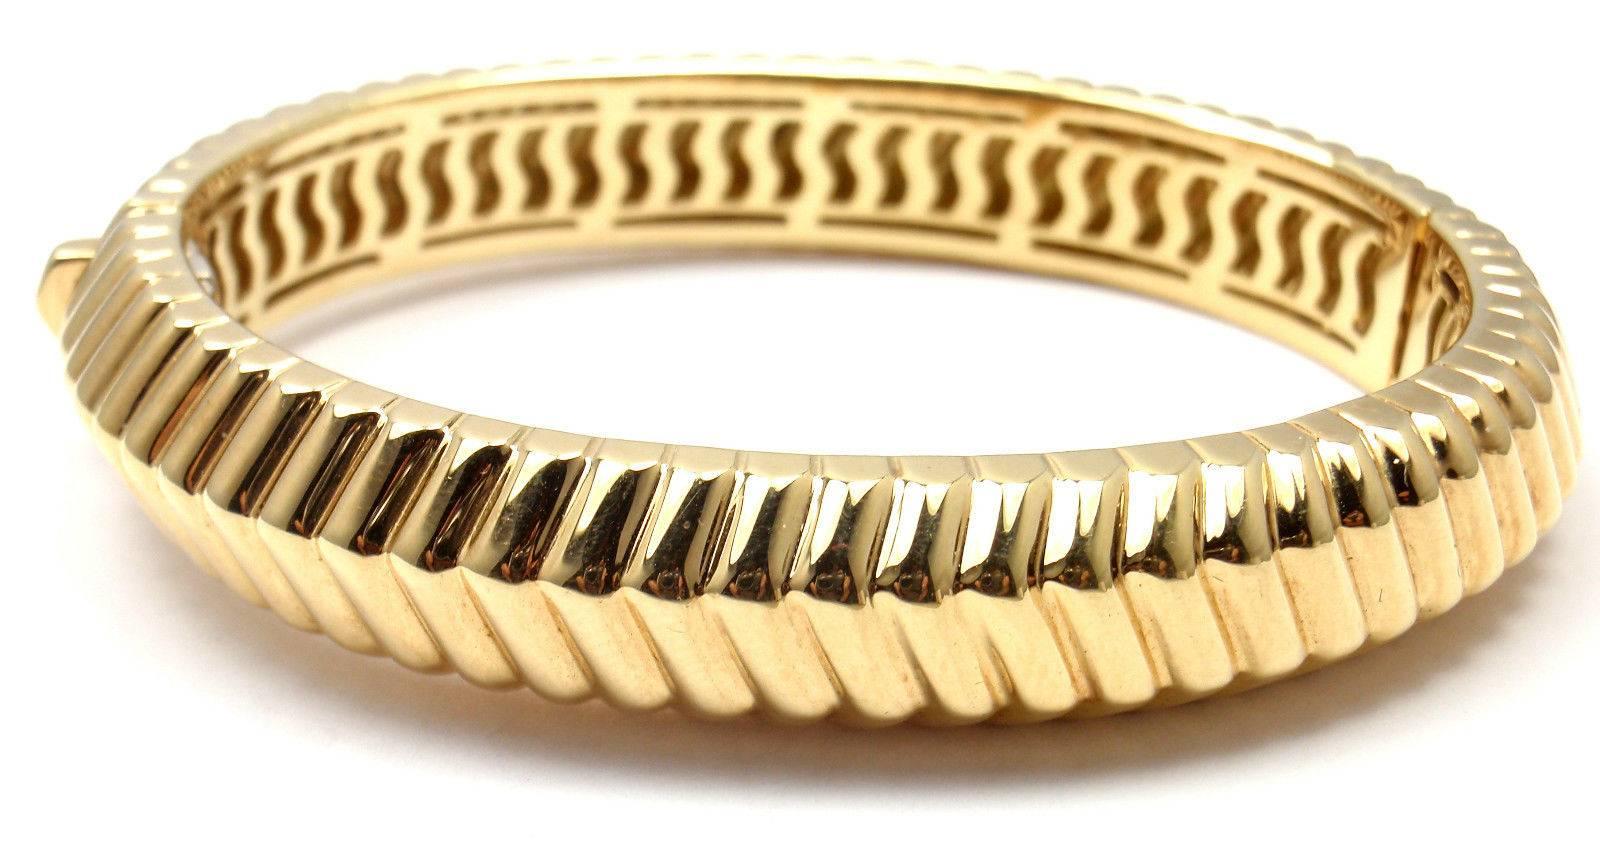 18k Yellow Gold Chevron Heavy Bangle Bracelet by Tiffany & Co.   

Details:  
Length 7